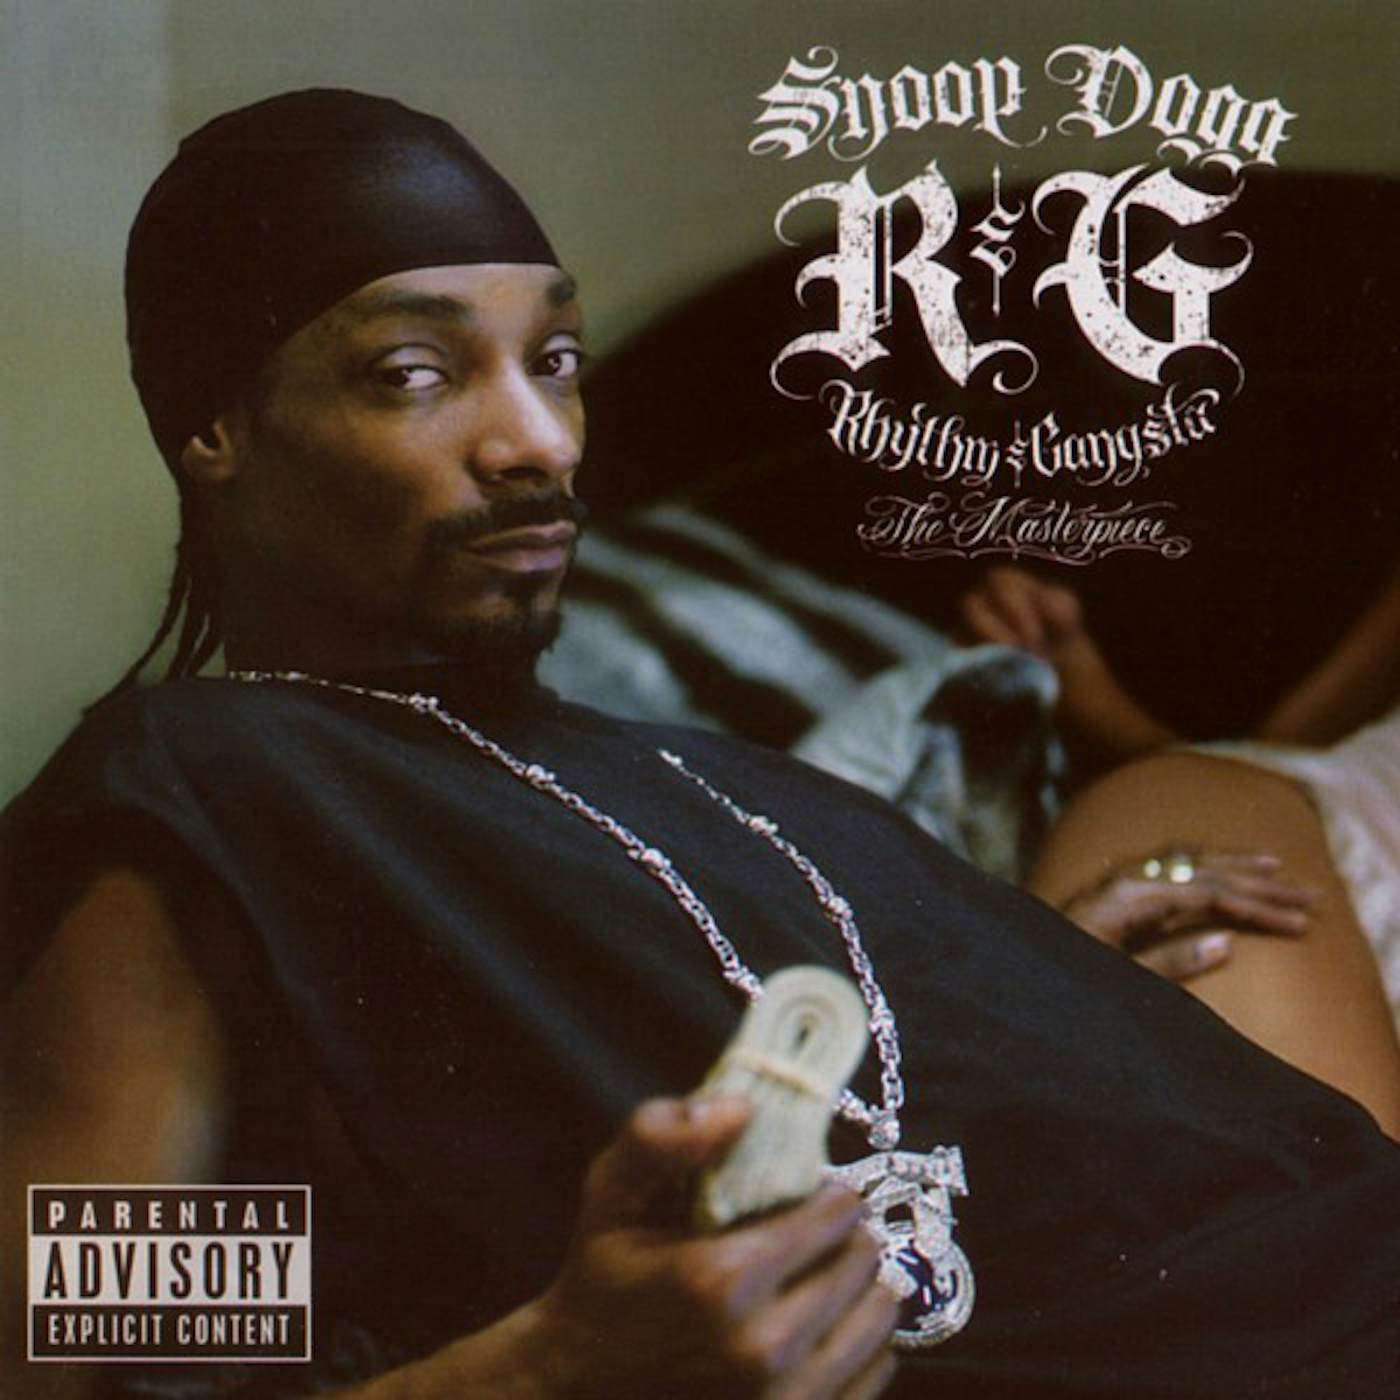 Snoop Dogg R&G (Rhythm & Gangsta): The Masterpiece Vinyl Record